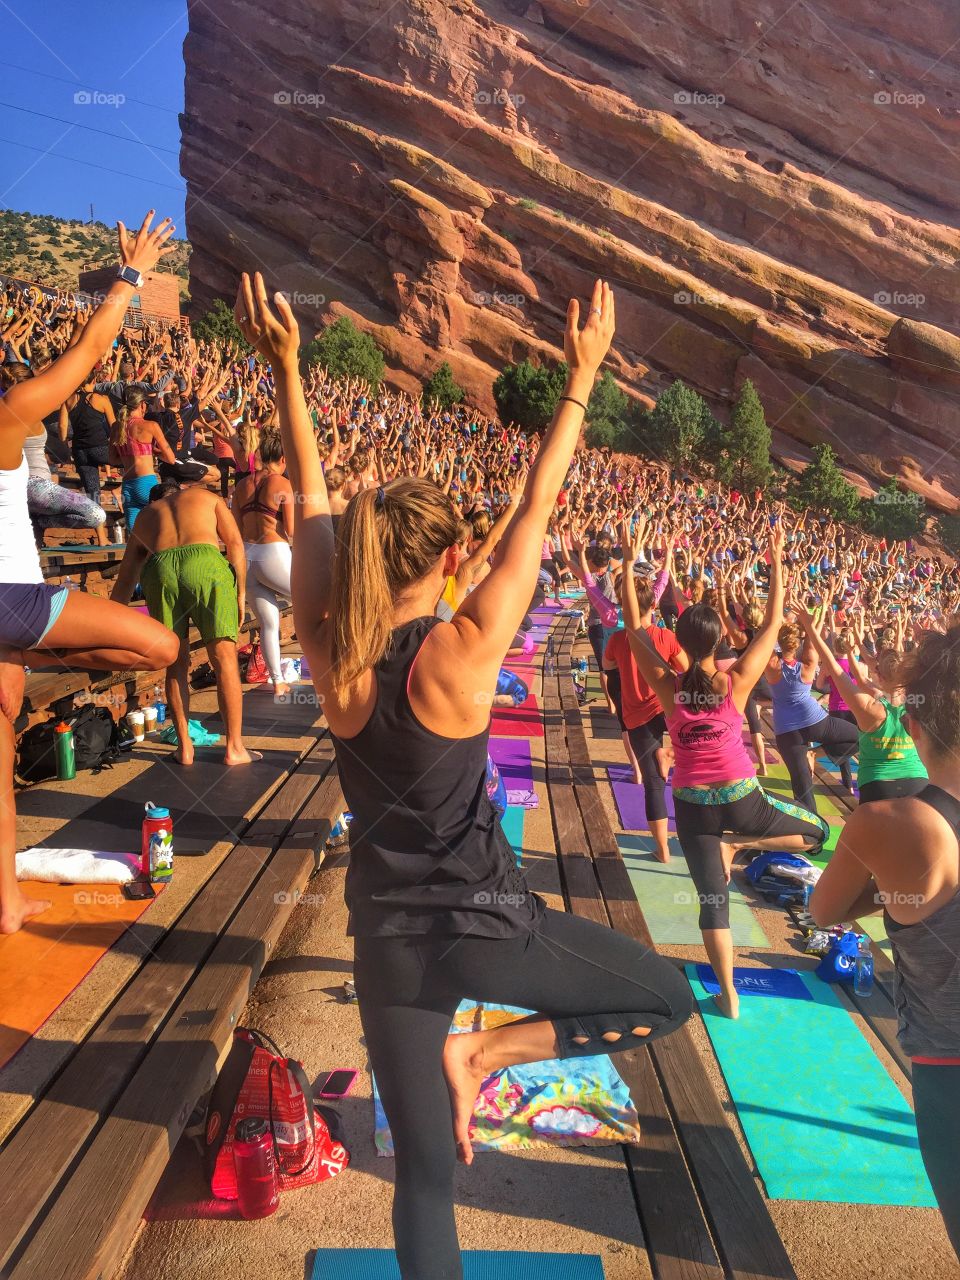 (Zen)ergy
Yoga on the Rocks
Red Rocks Amphitheater 